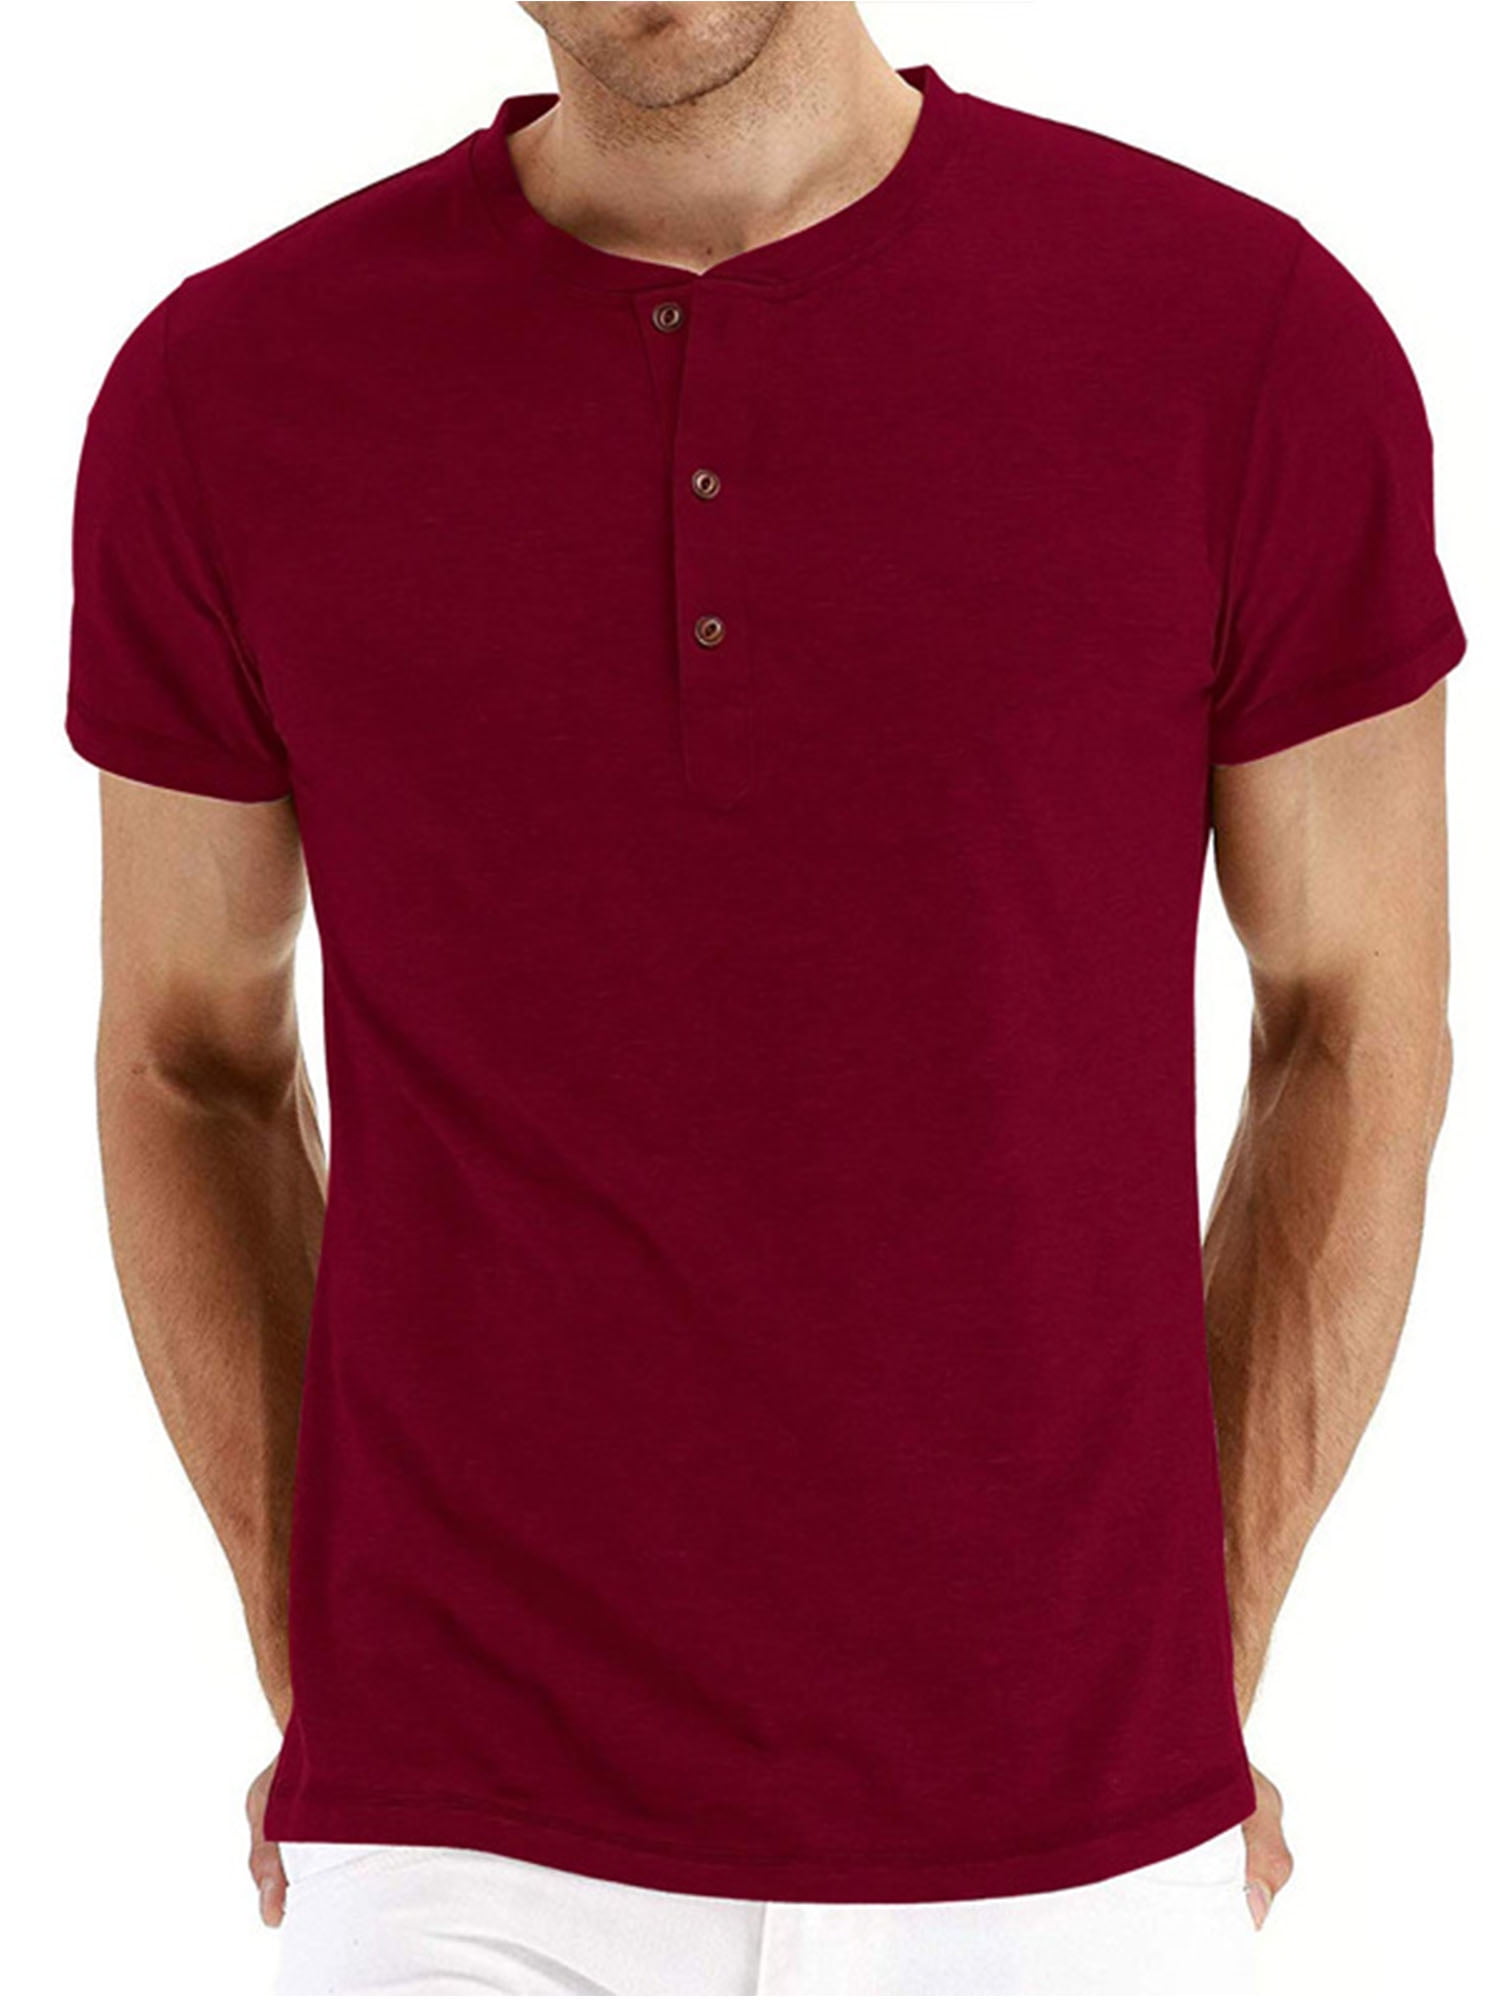 New Fashion Mens Stylish Casual T-Shirts Slim Fit Short Sleeve NEW Shirt Tops